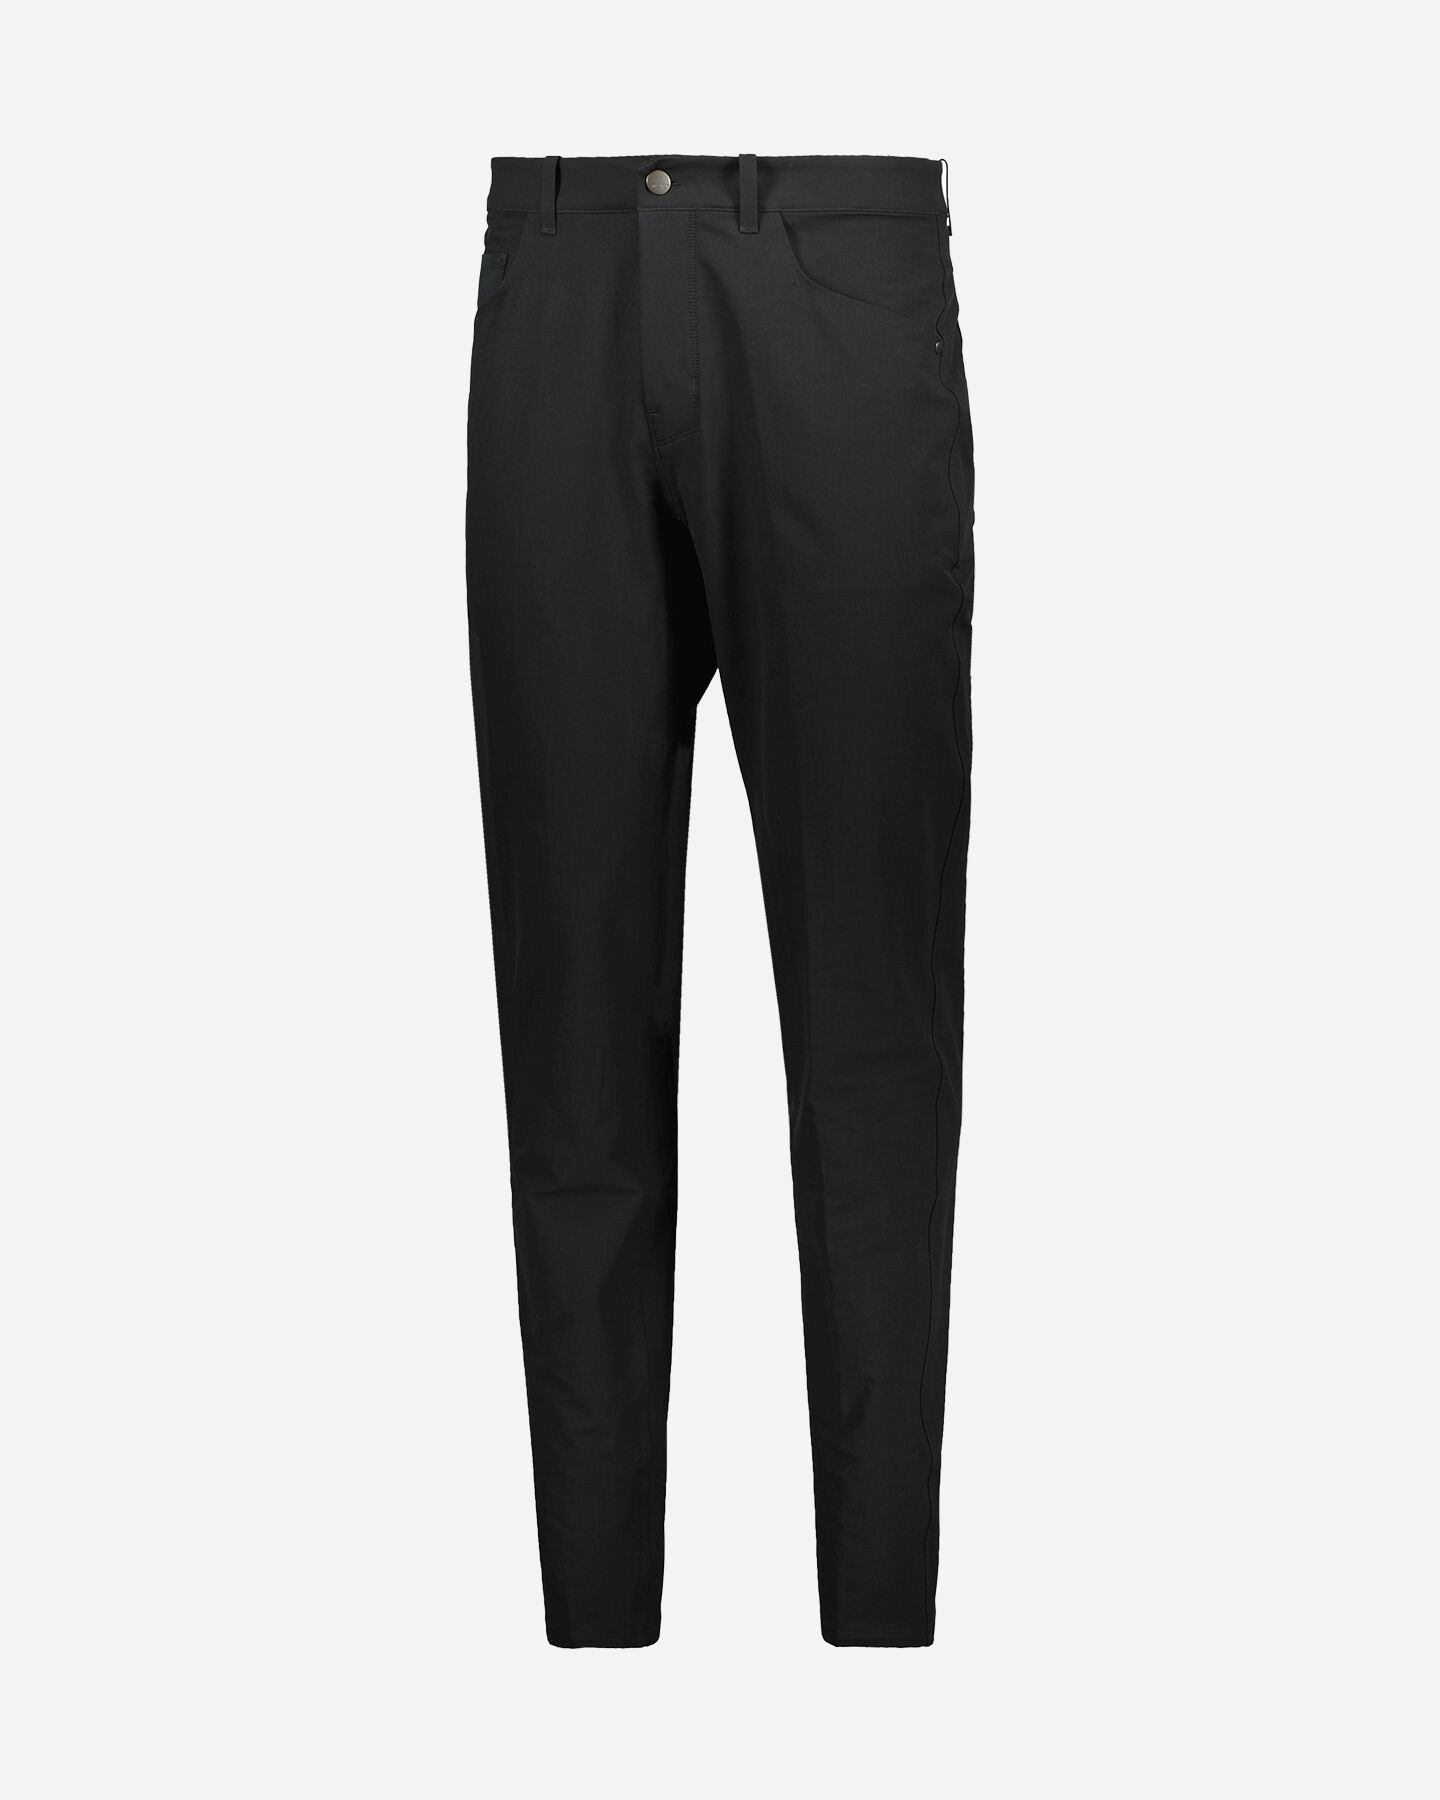  Pantalone outdoor ARC'TERYX LEVON M S4114882|1|30-R scatto 0